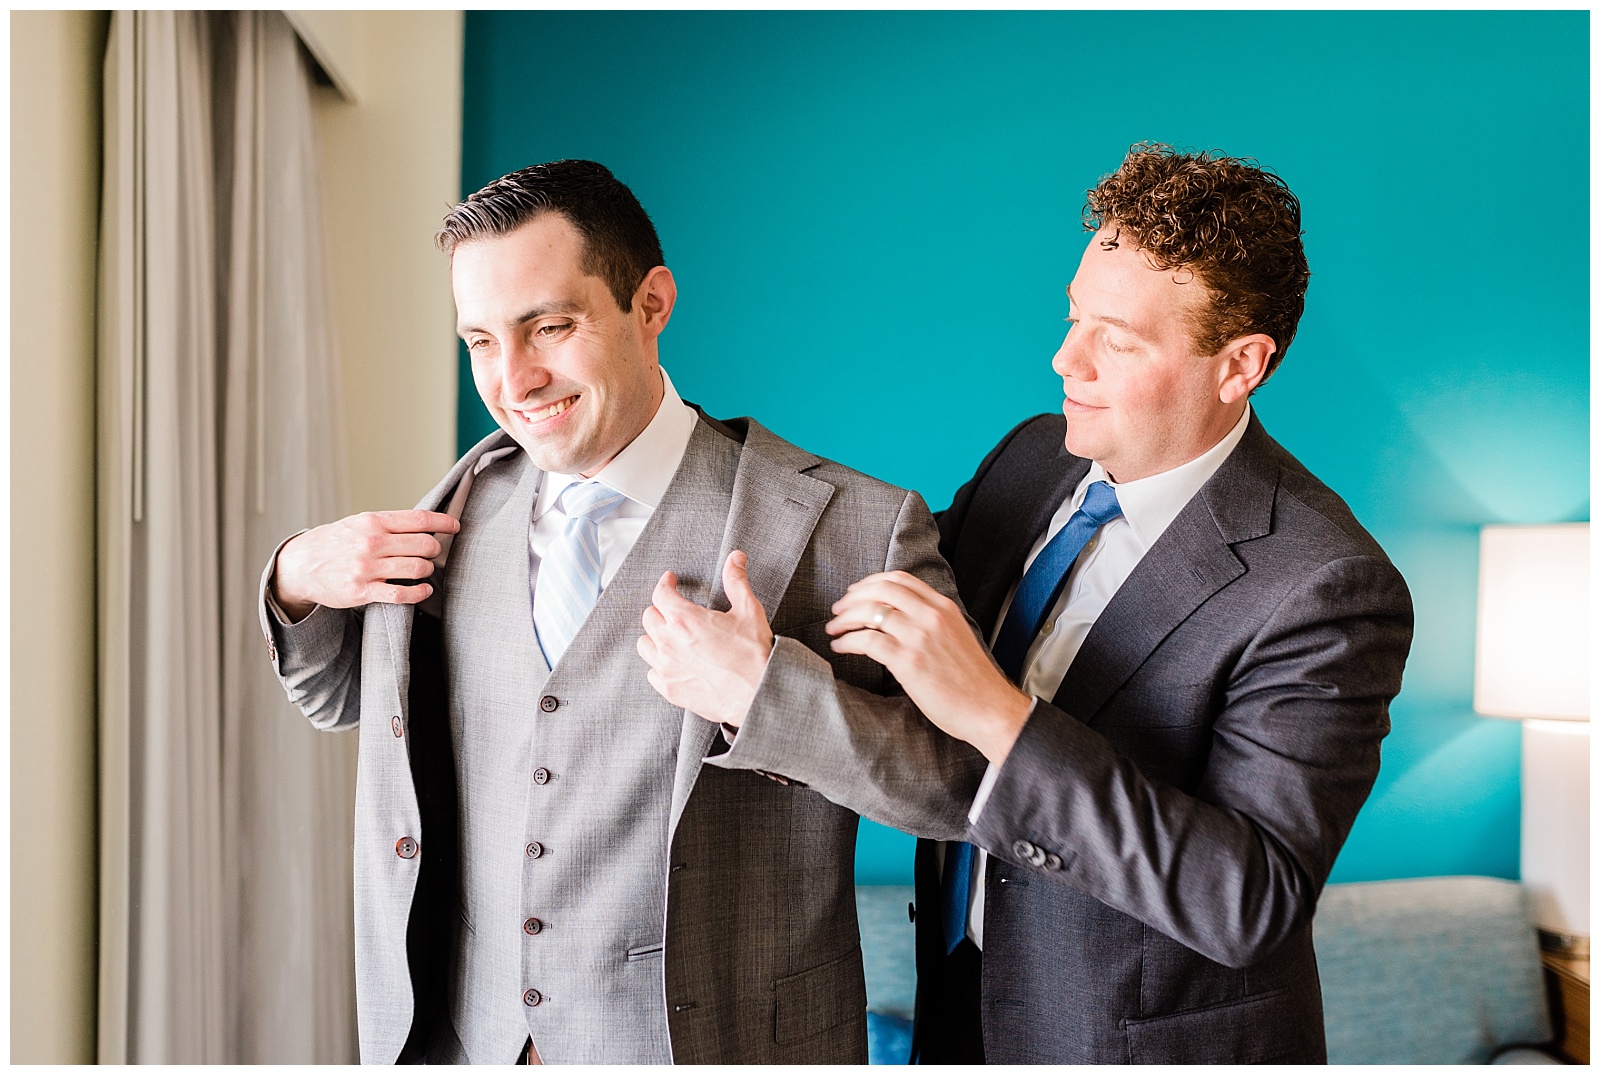 Best man helps groom put on his jacket.